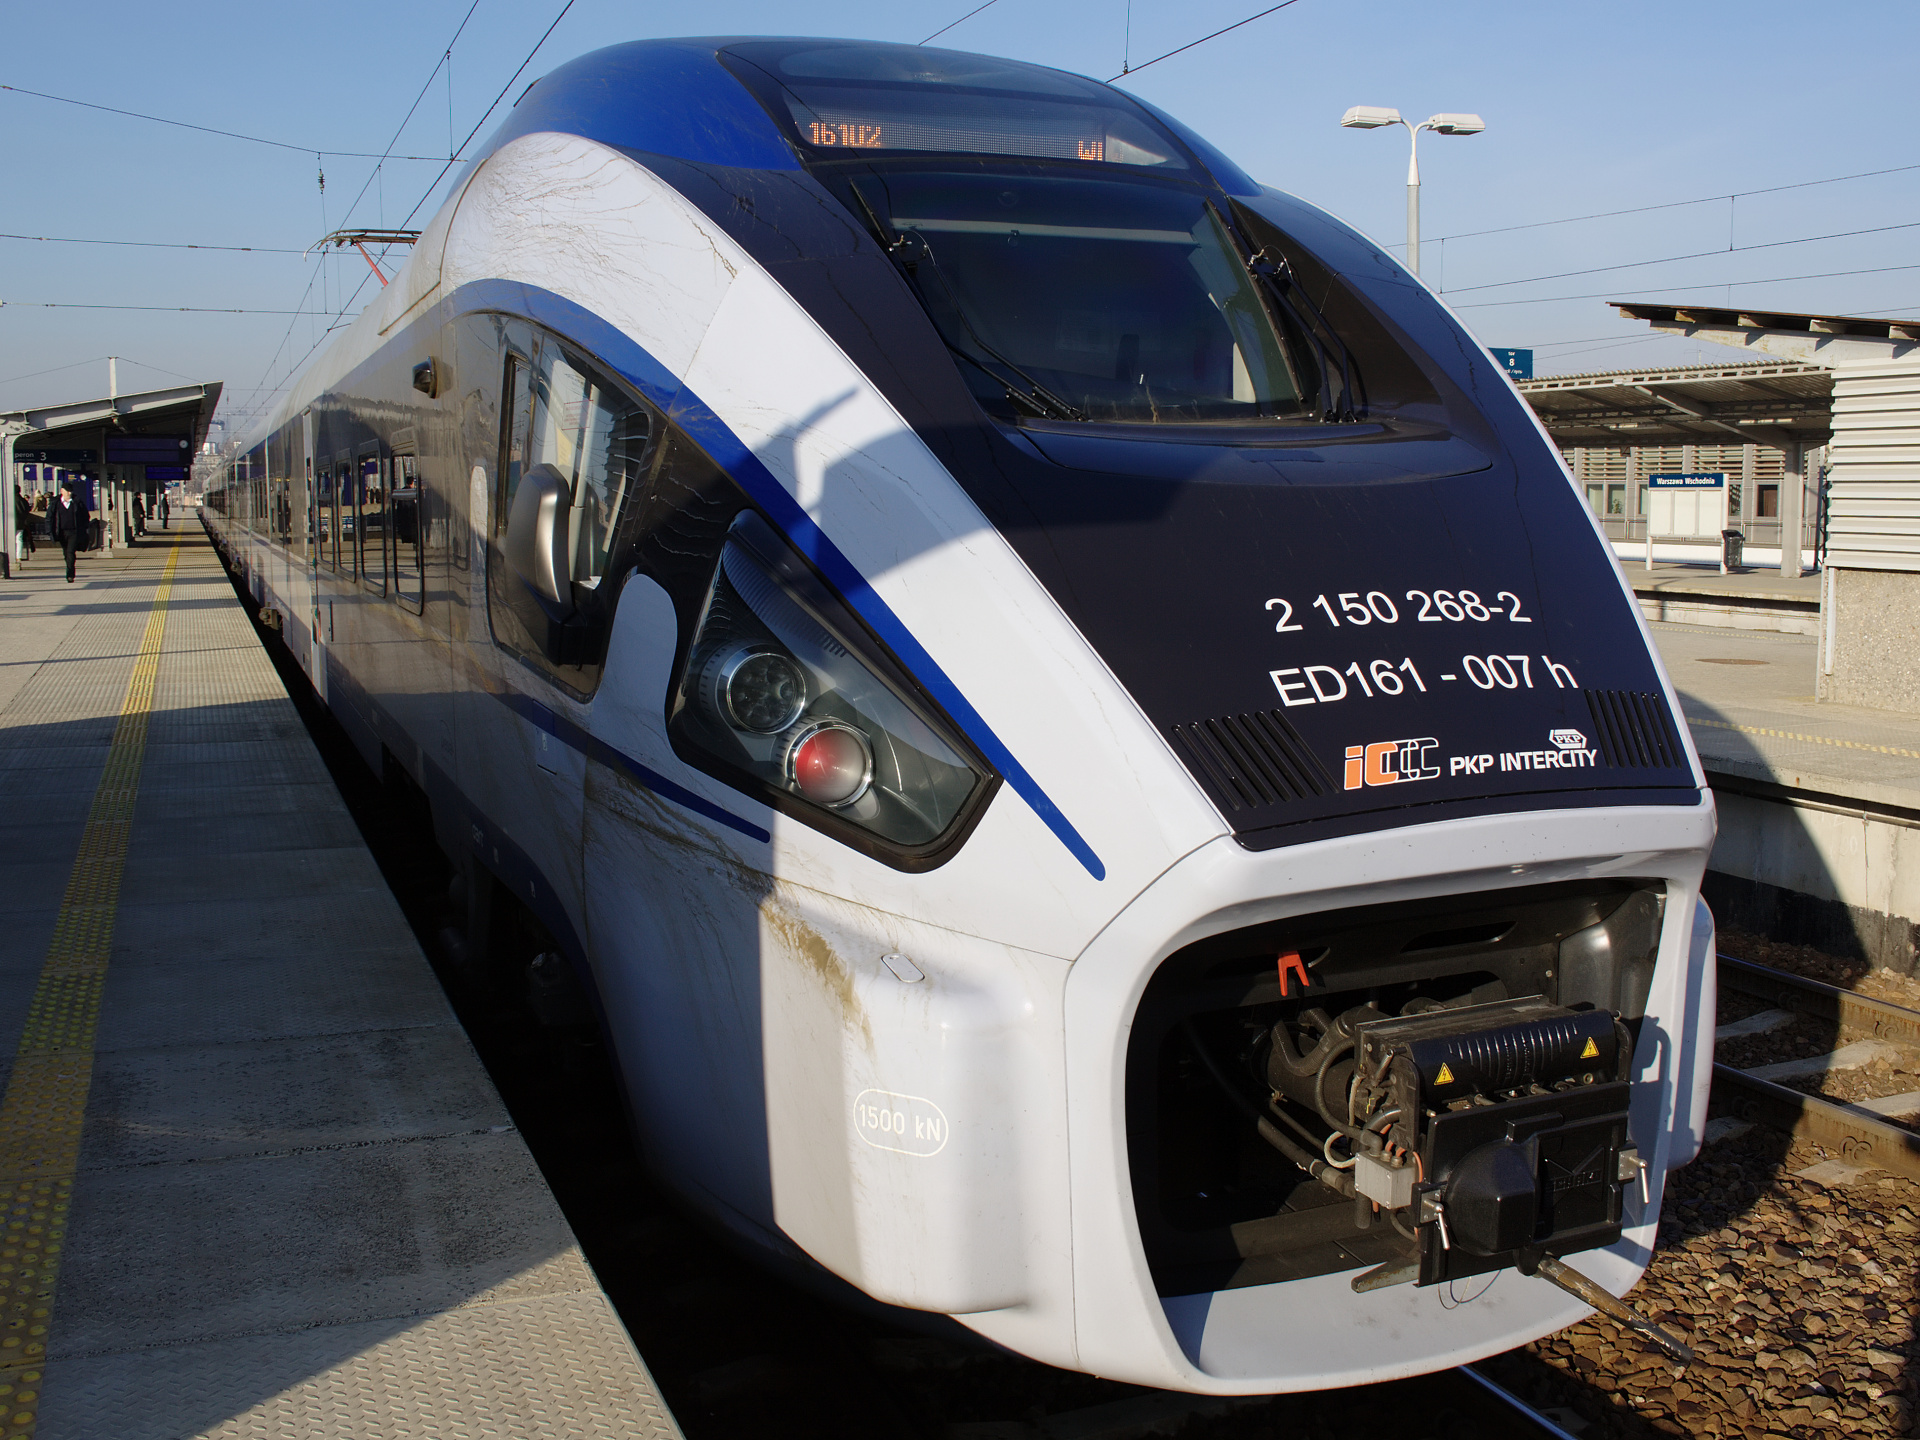 43WE ED161-007 (Vehicles » Trains and Locomotives » Pesa Dart)